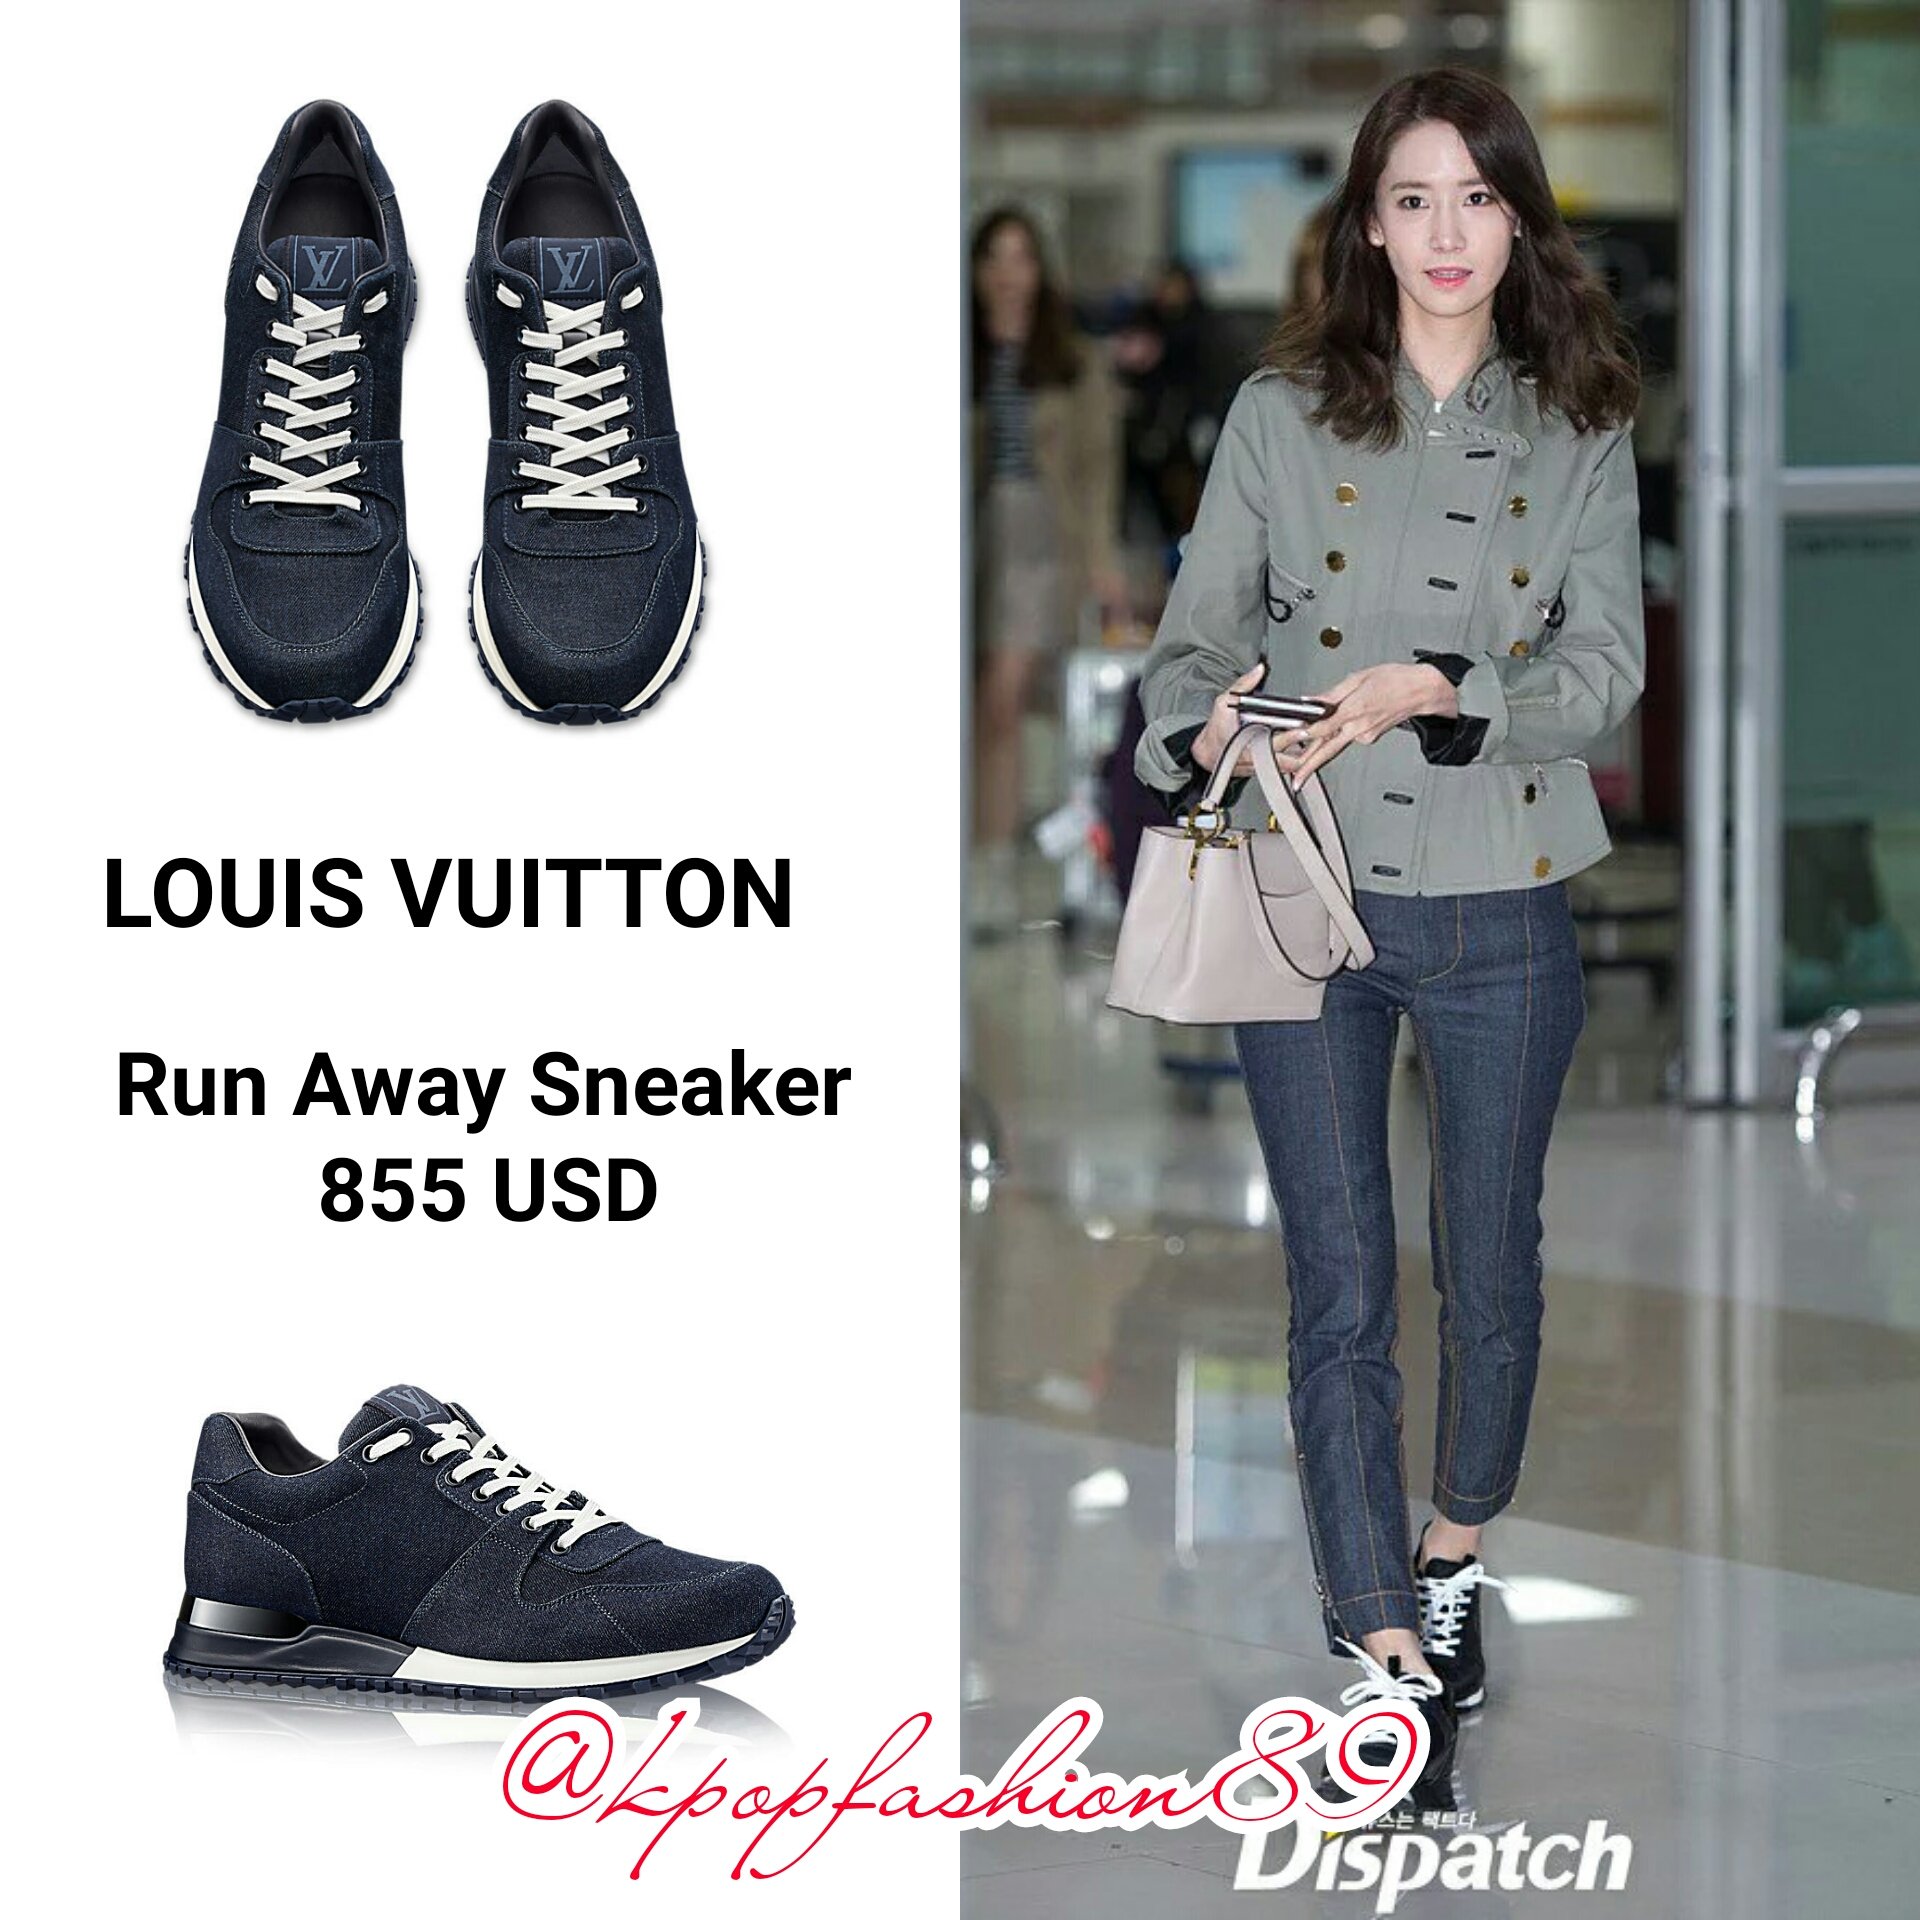 airport_fashion ಮೇಲೆ X: 160423 #Yoona #SNSD LOUIS VUITTON: Run Away Sneaker   #airportfashion  / X